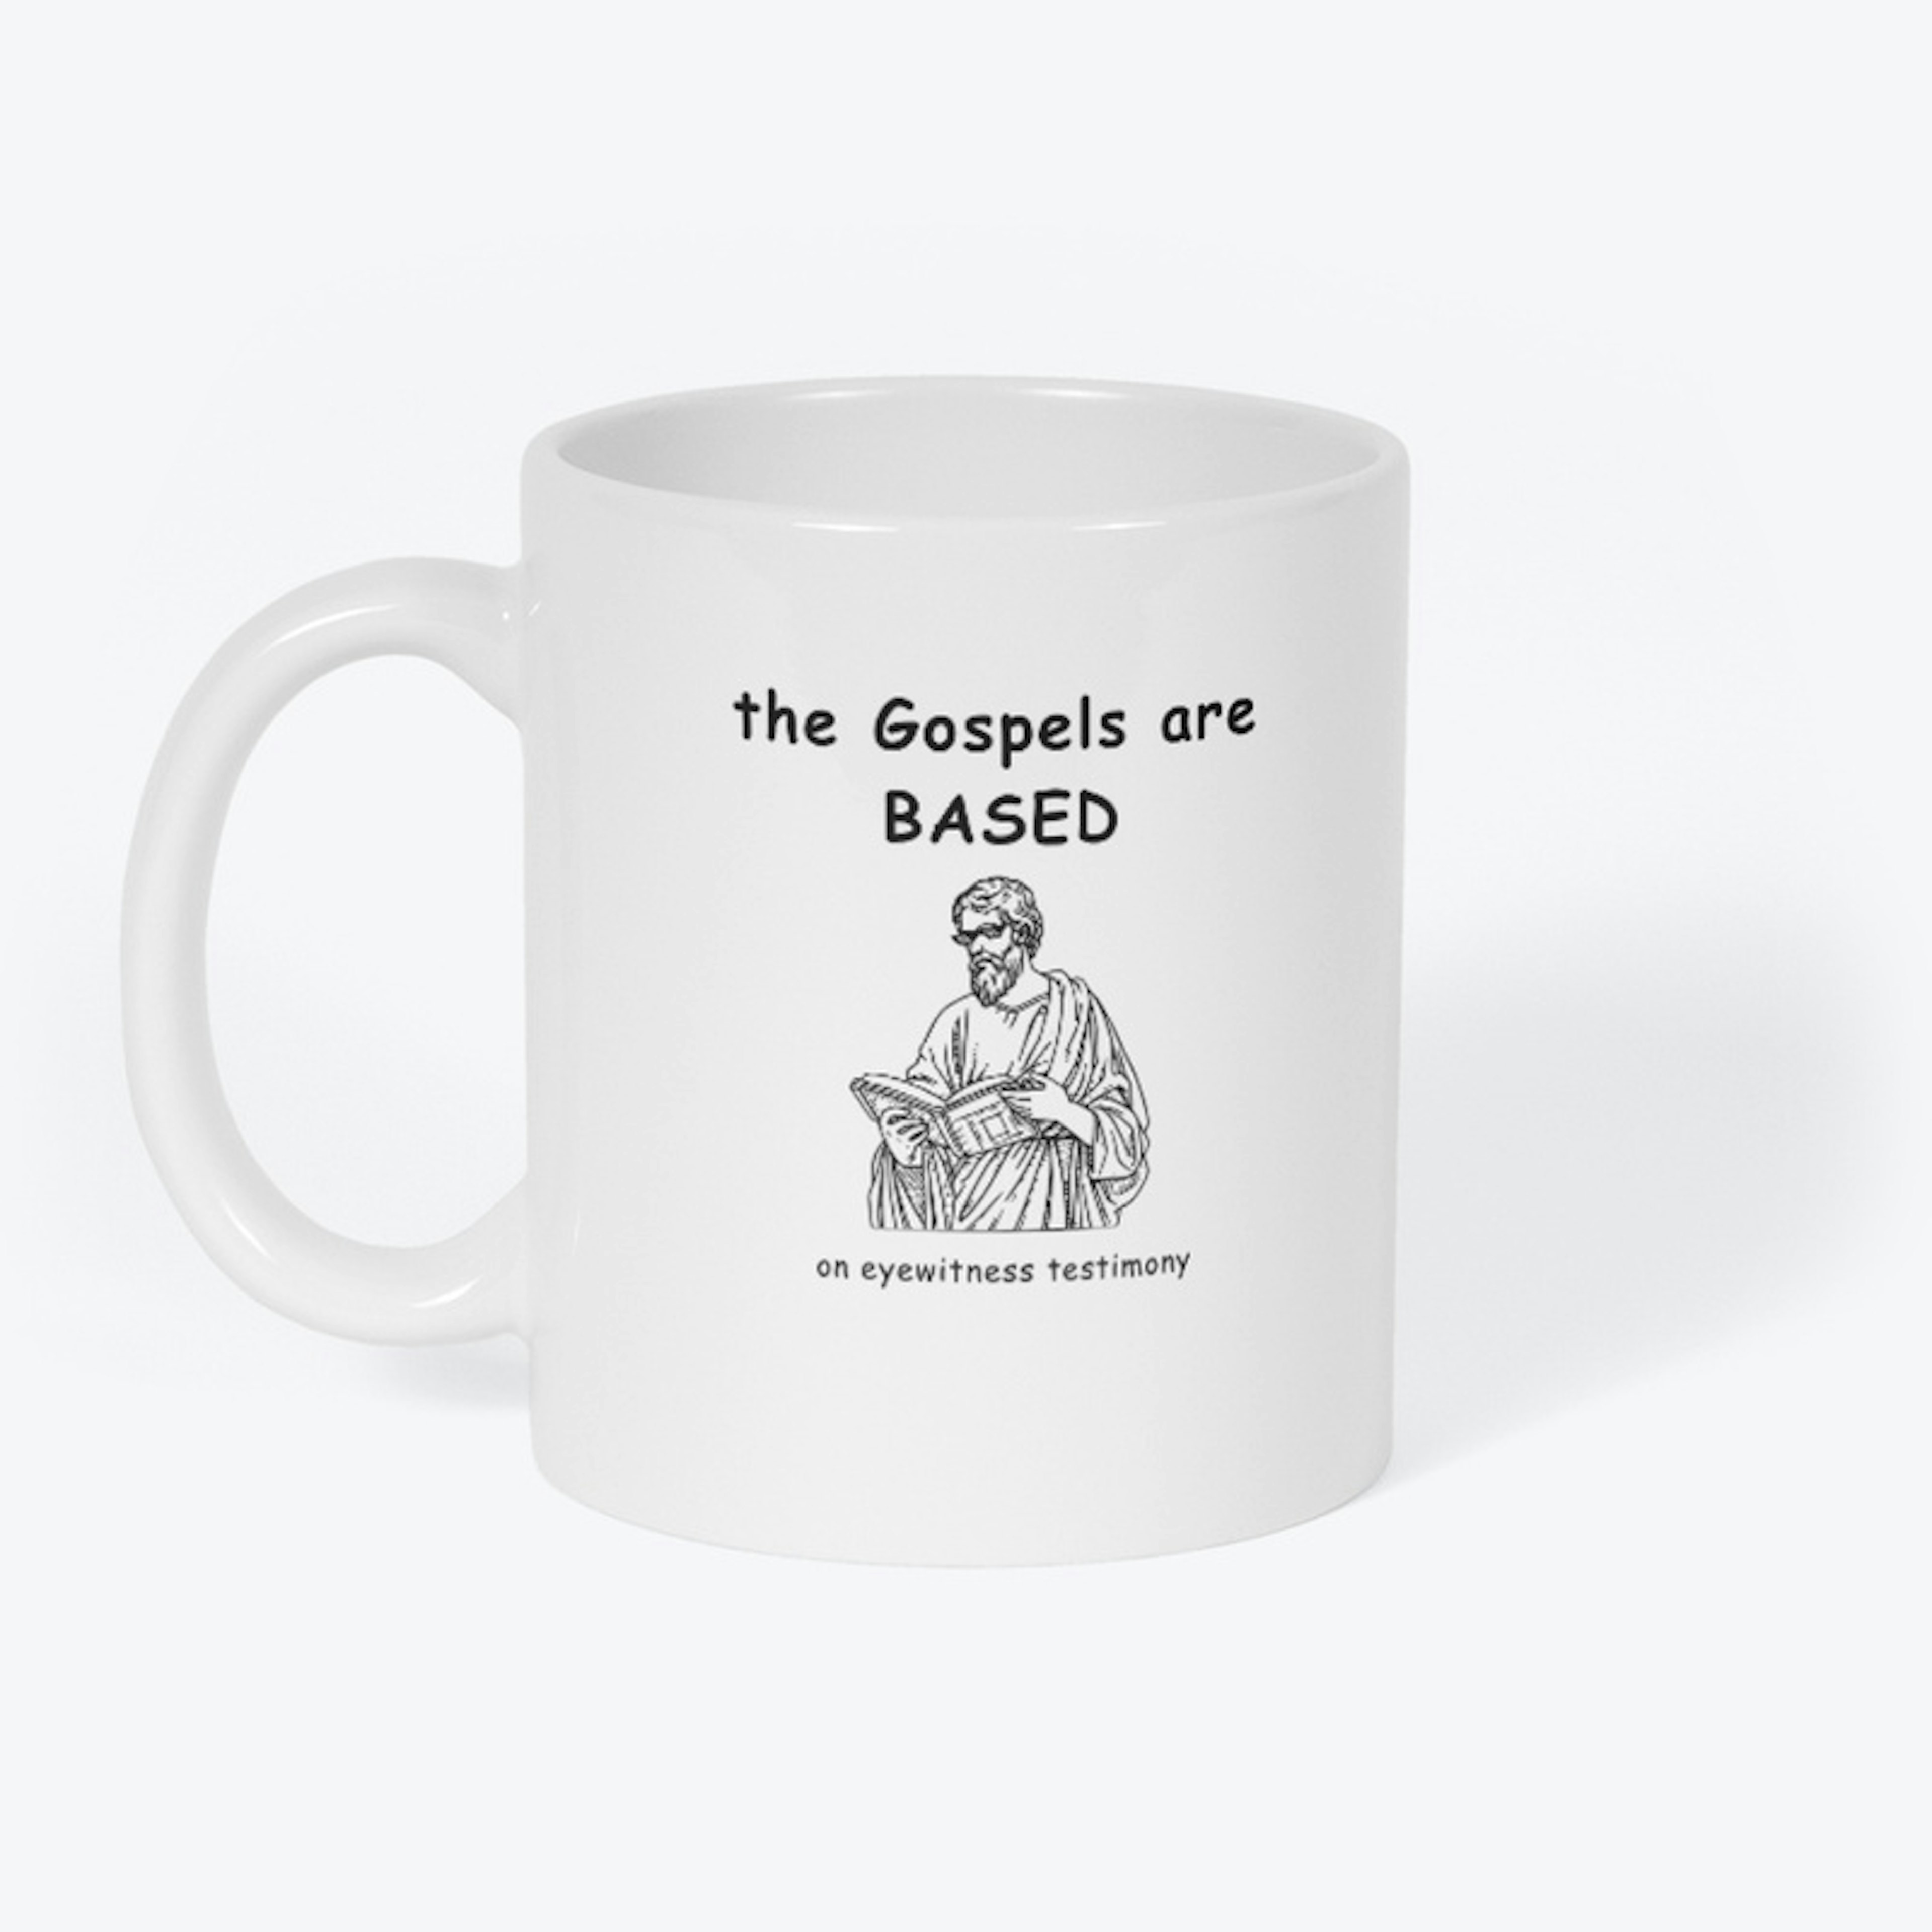 The Gospels are Based